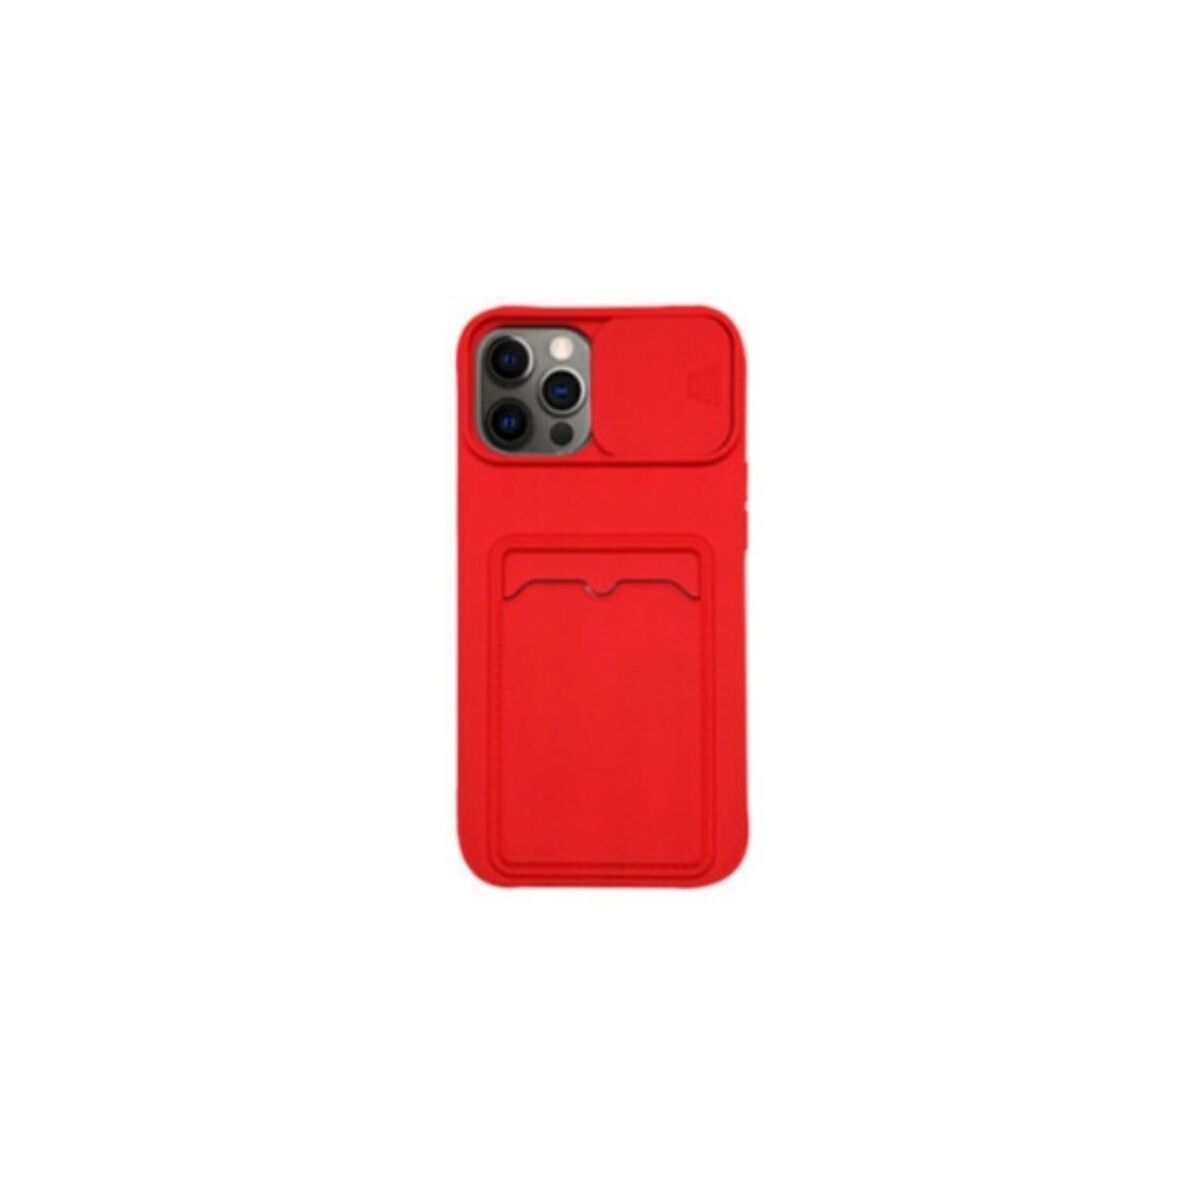 Protector cubre cámara para Iphone 11 rojo 